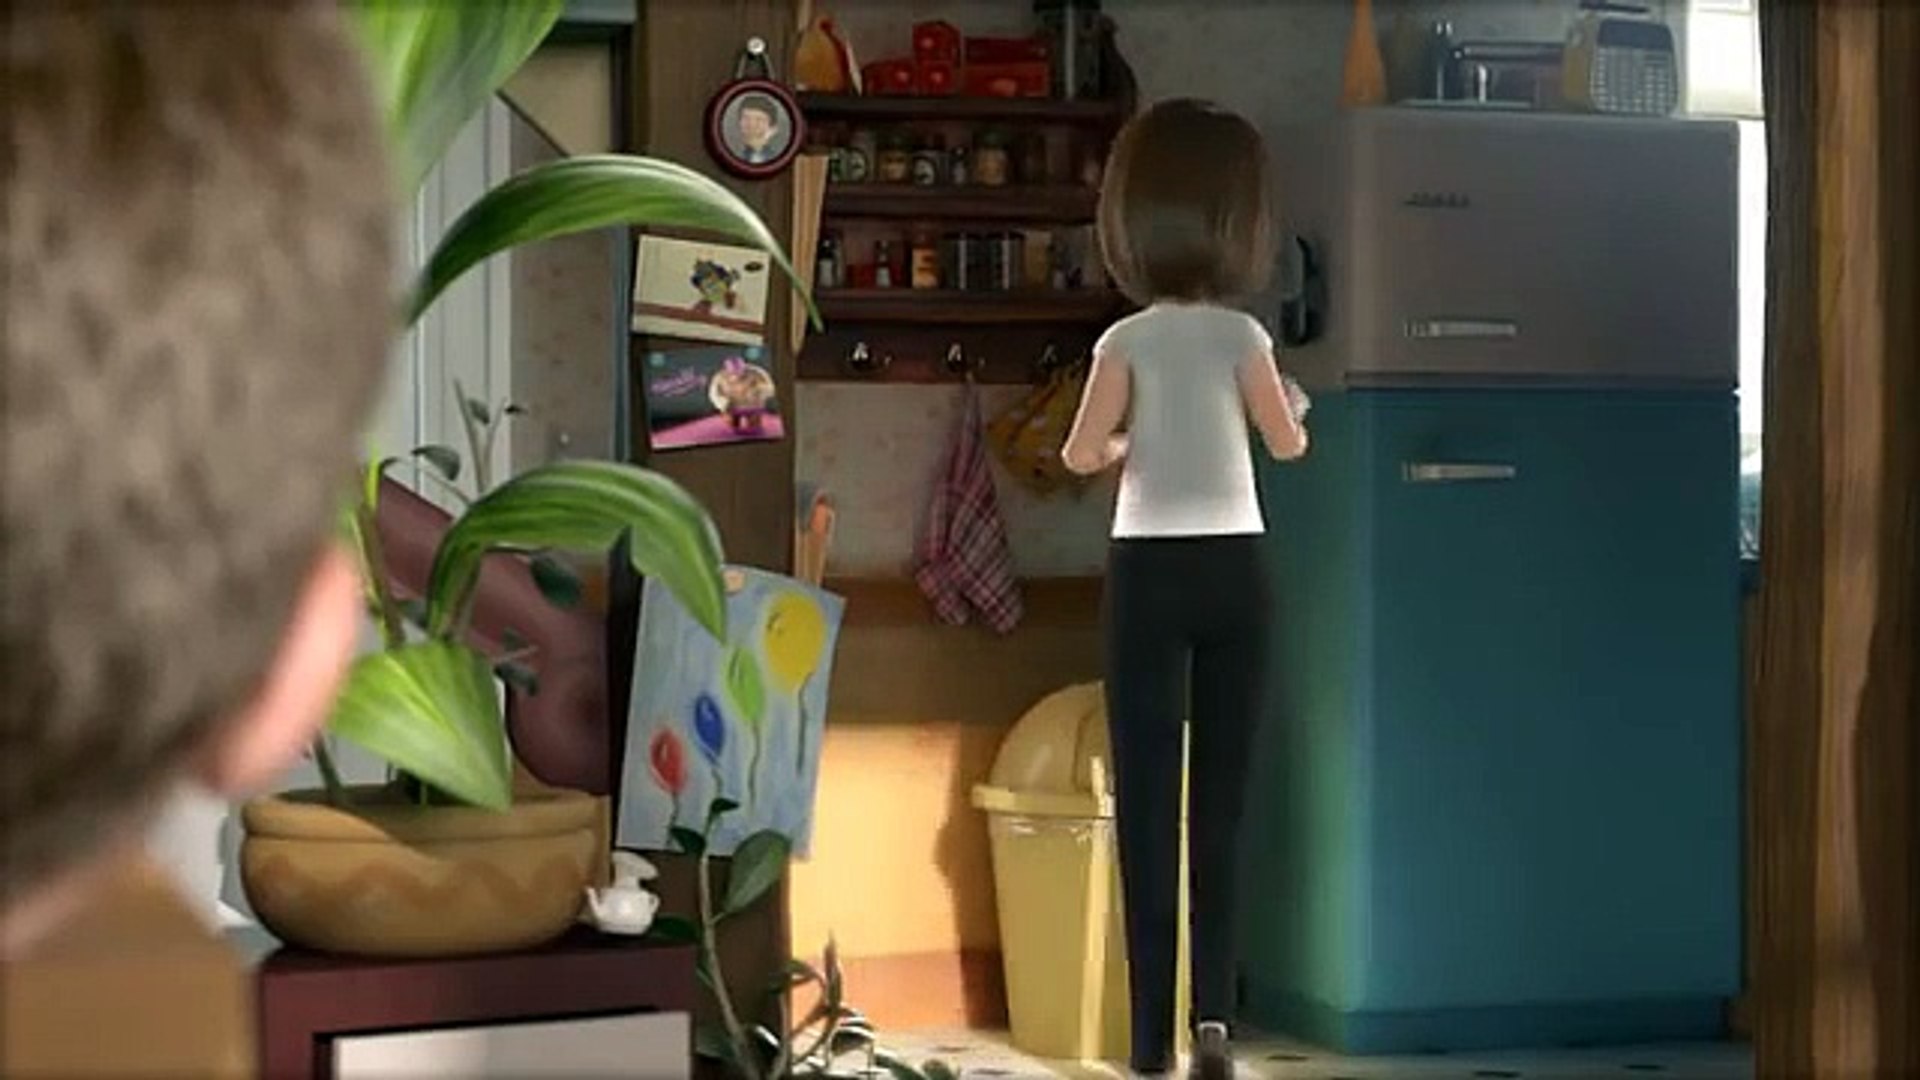 The Present (2014) | Animation Short Film